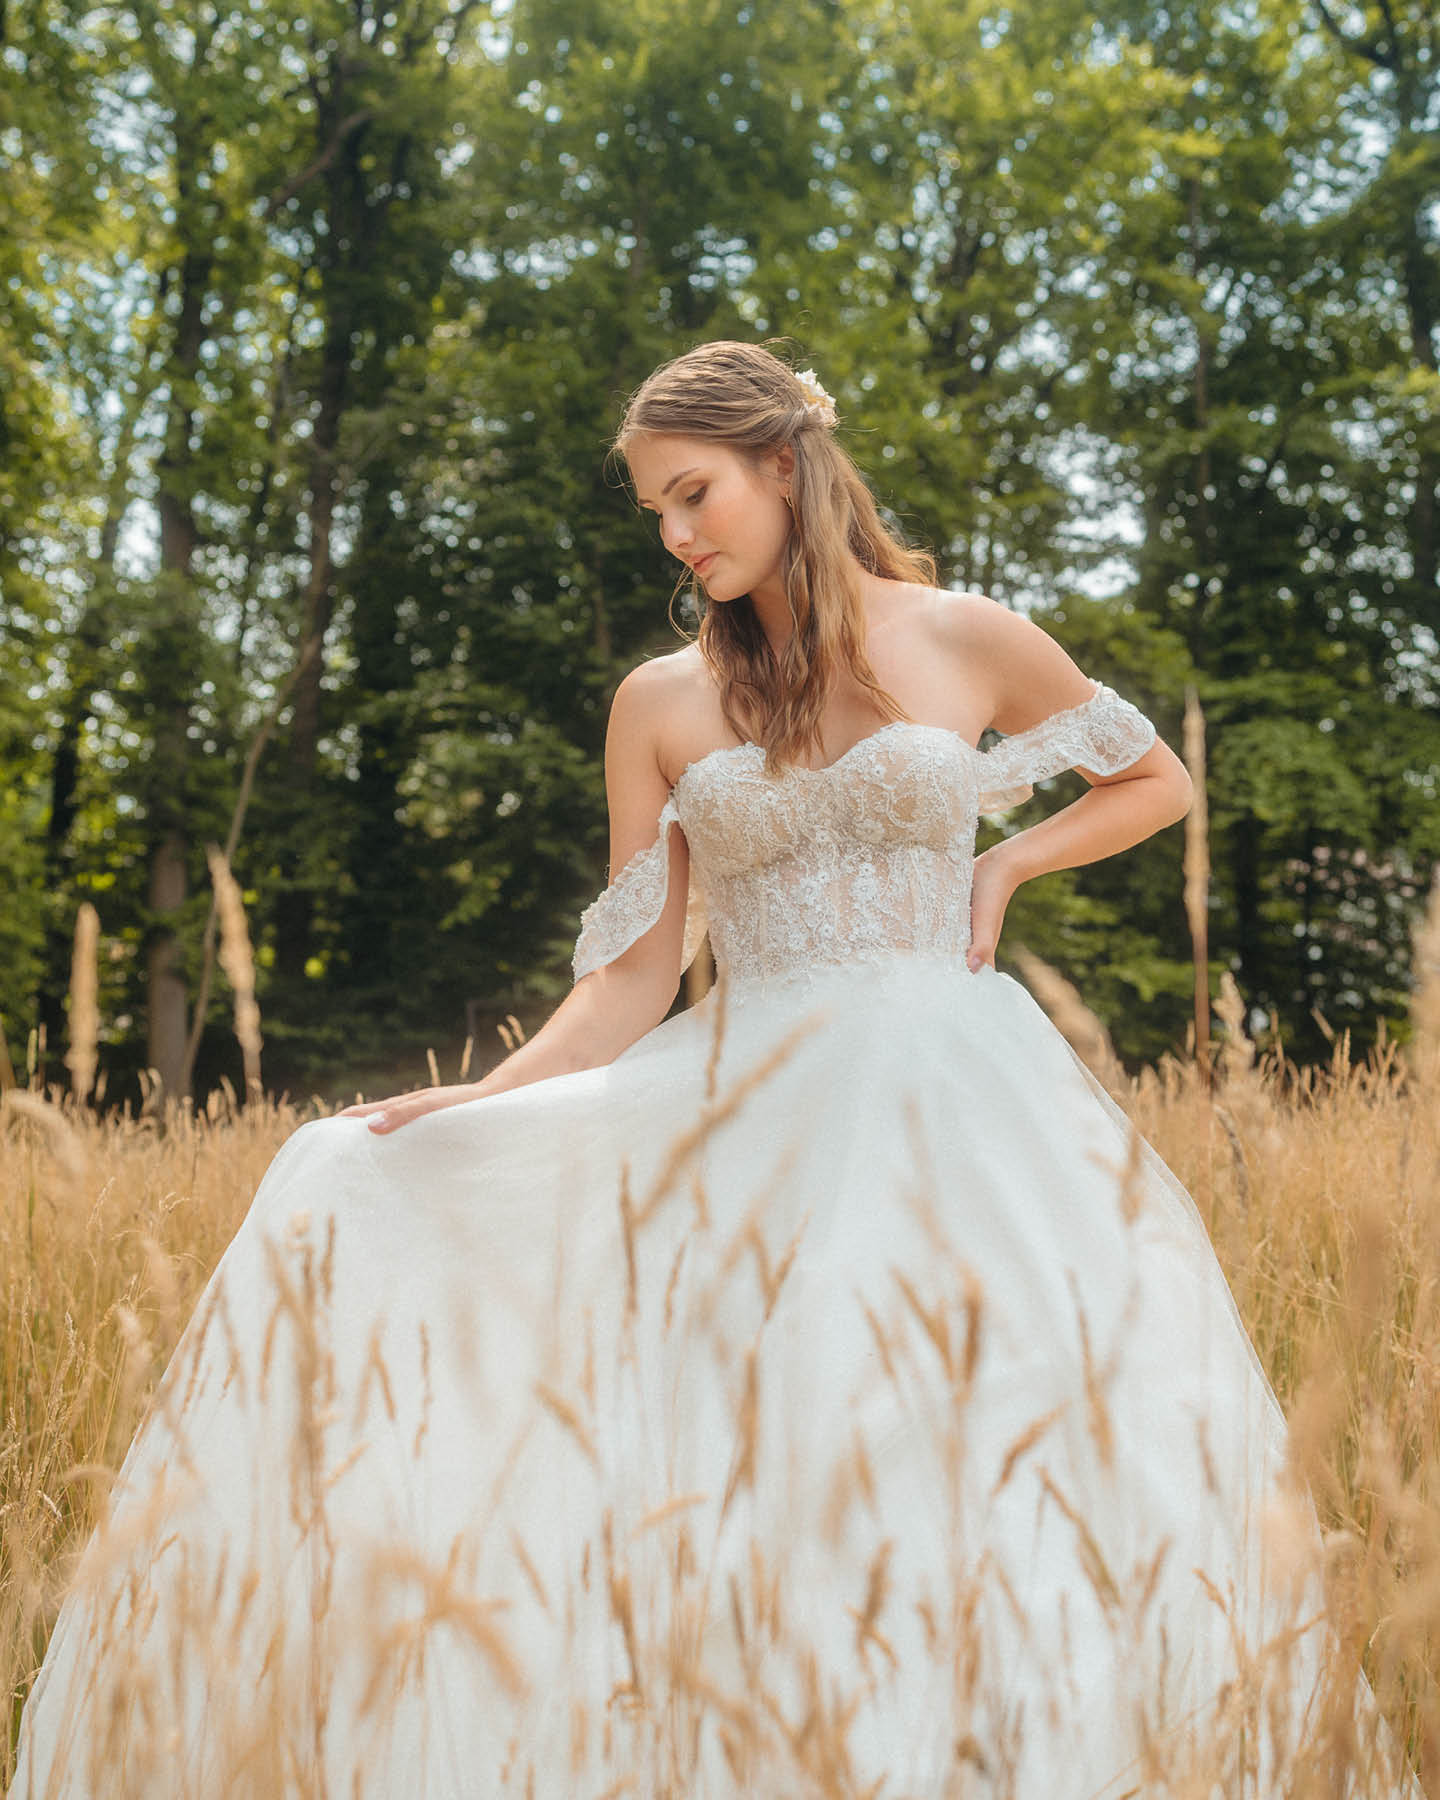 Frau im Brautkleid steht in einem Feld.